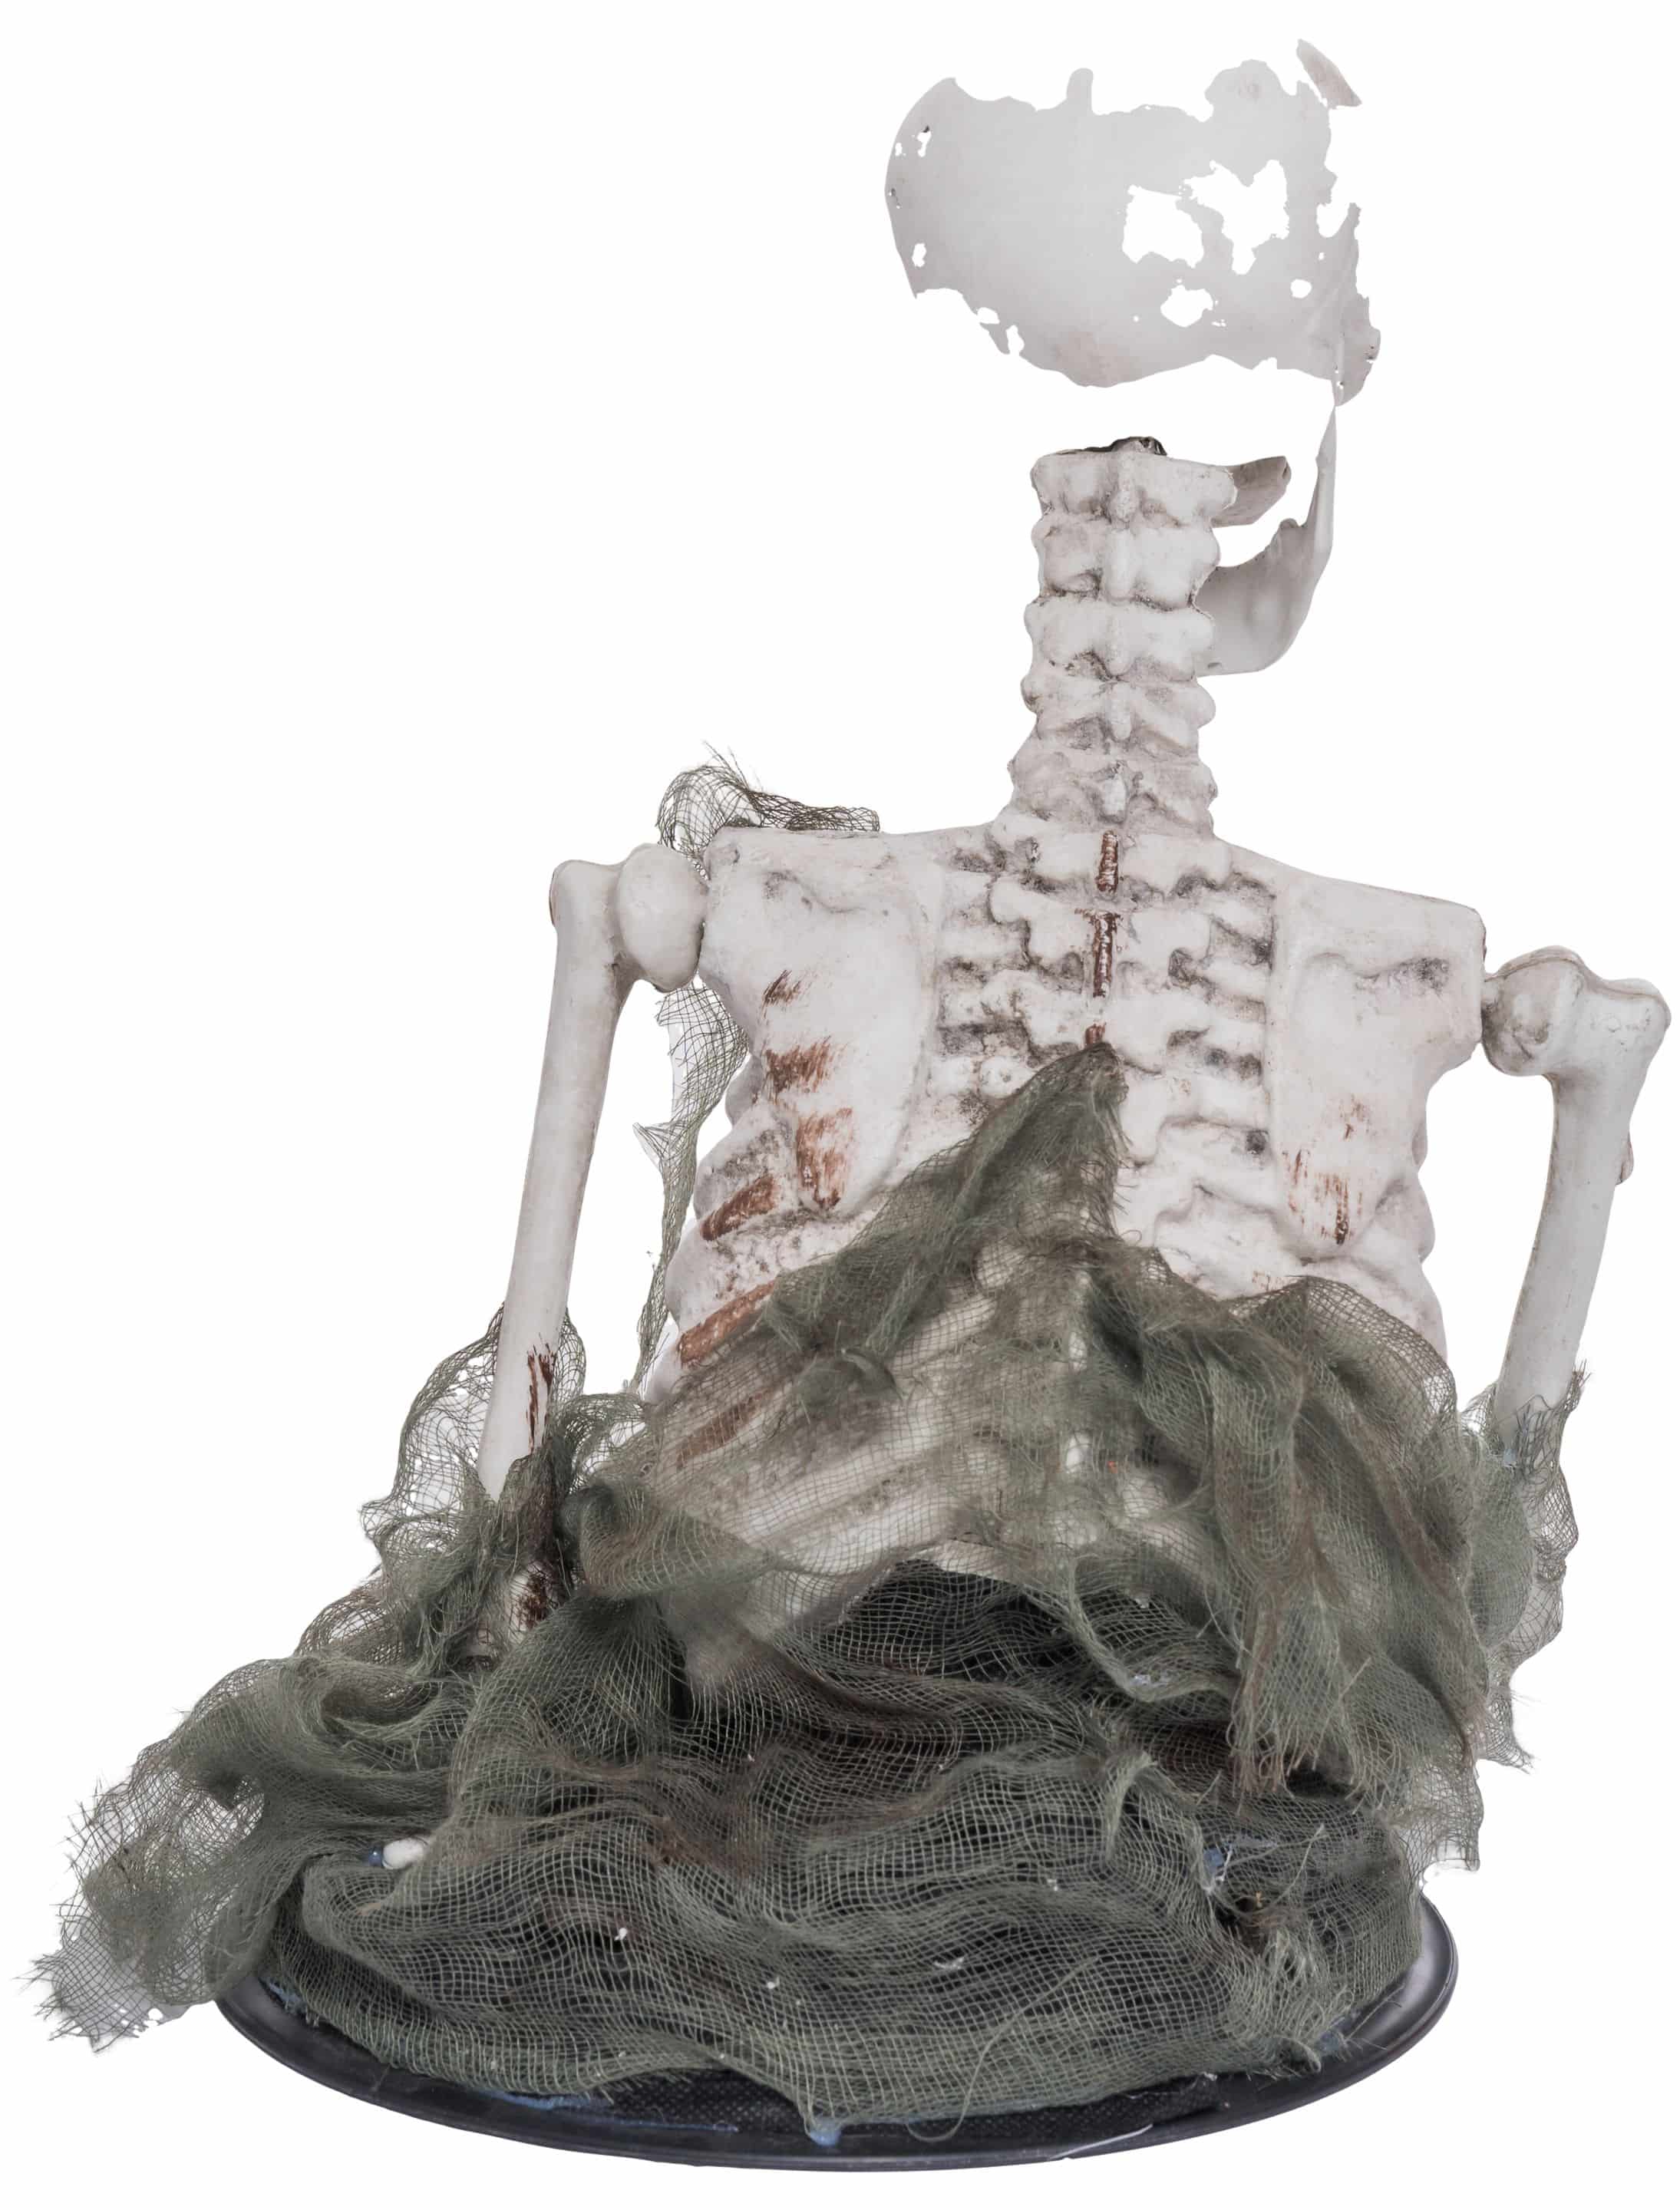 Skelett im Moos mit Funktion